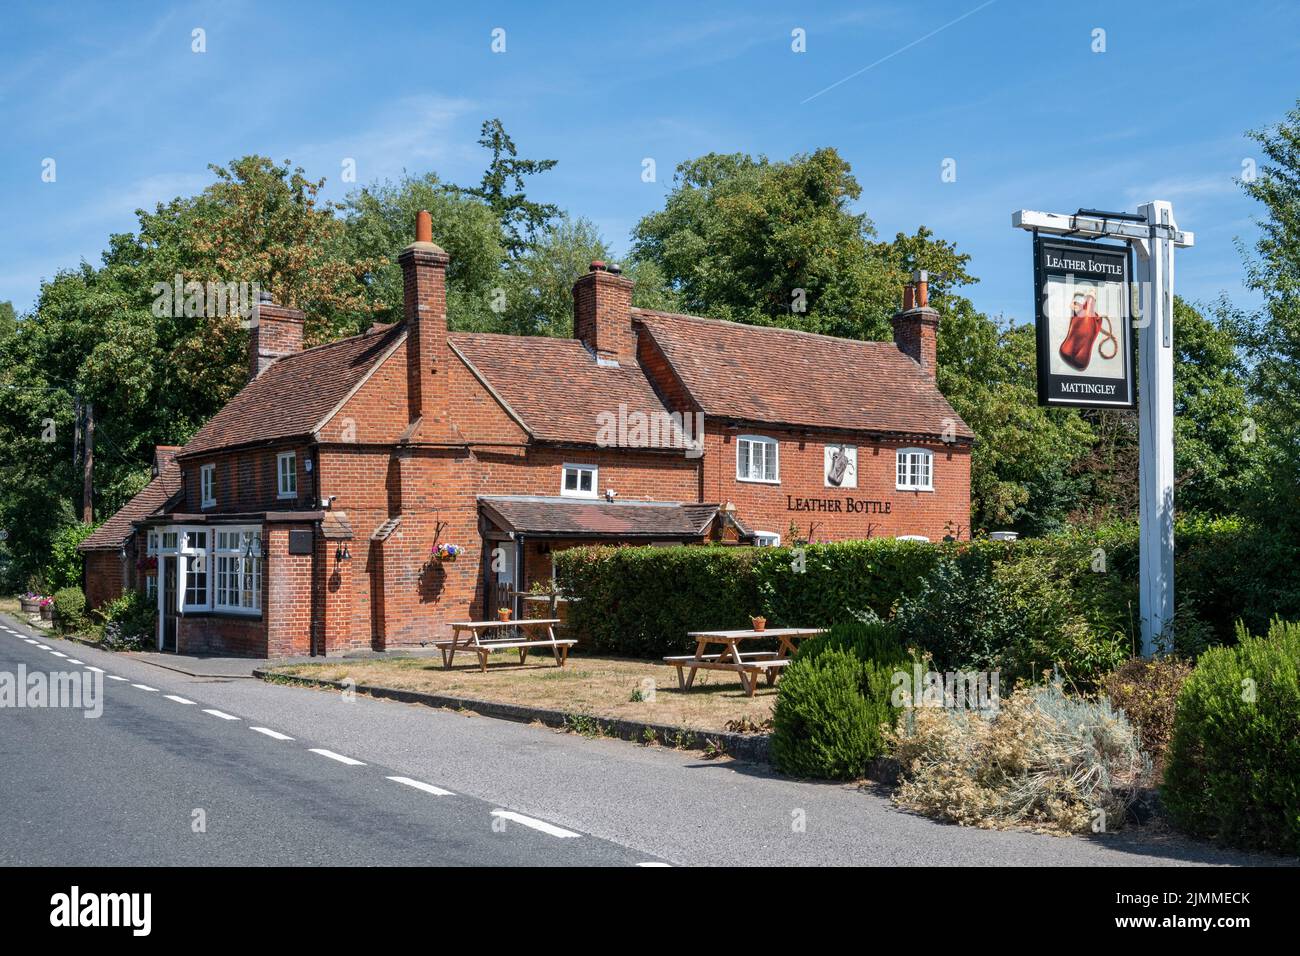 The Leather Bottle pub in Mattingley, Hampshire, England, UK, an old village inn. Stock Photo